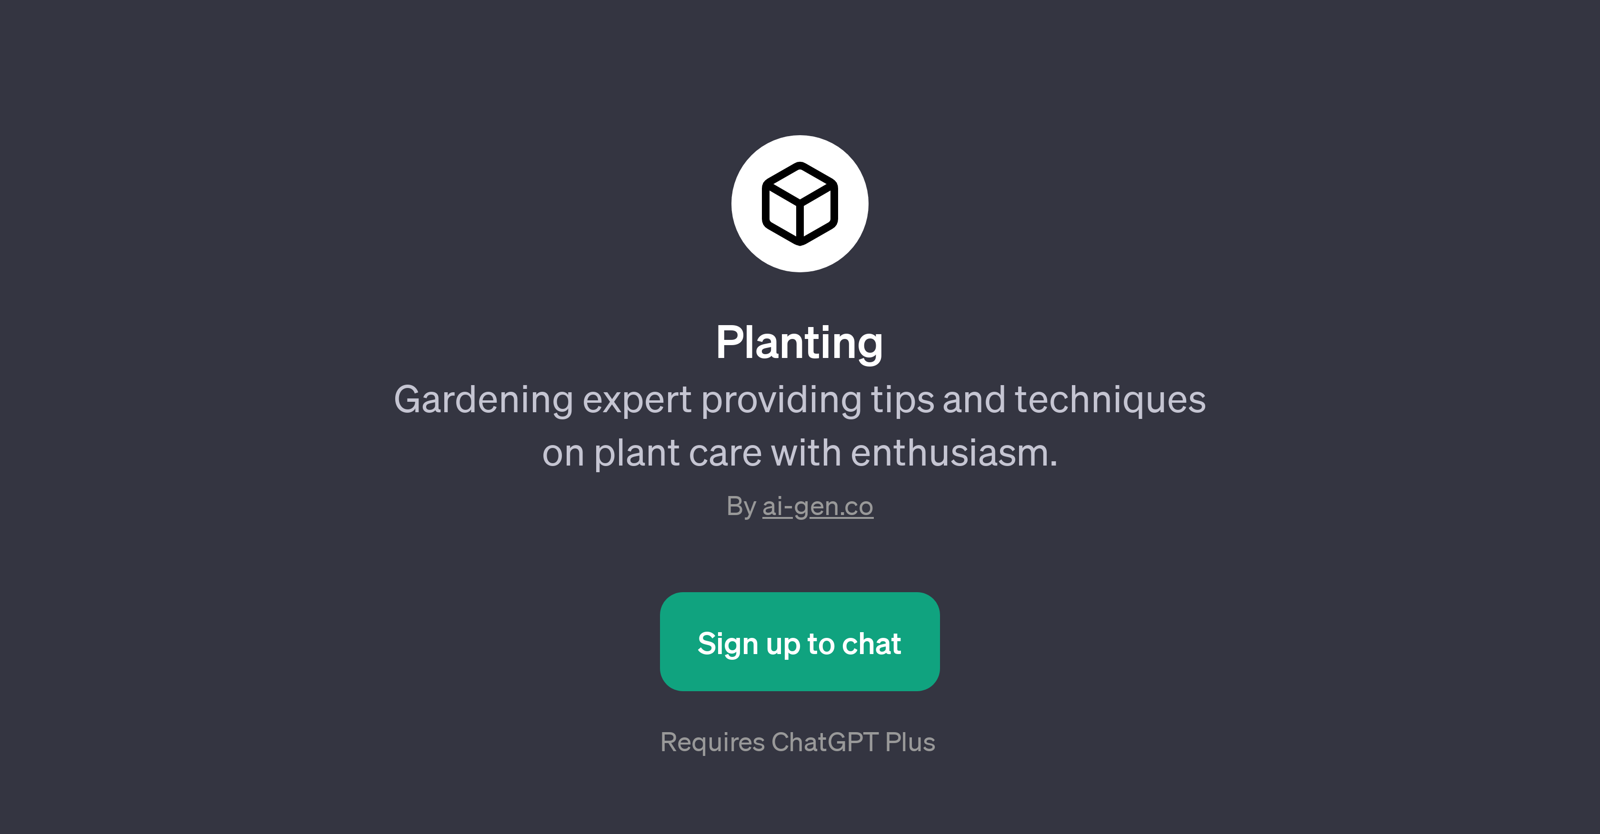 PlantingPage website